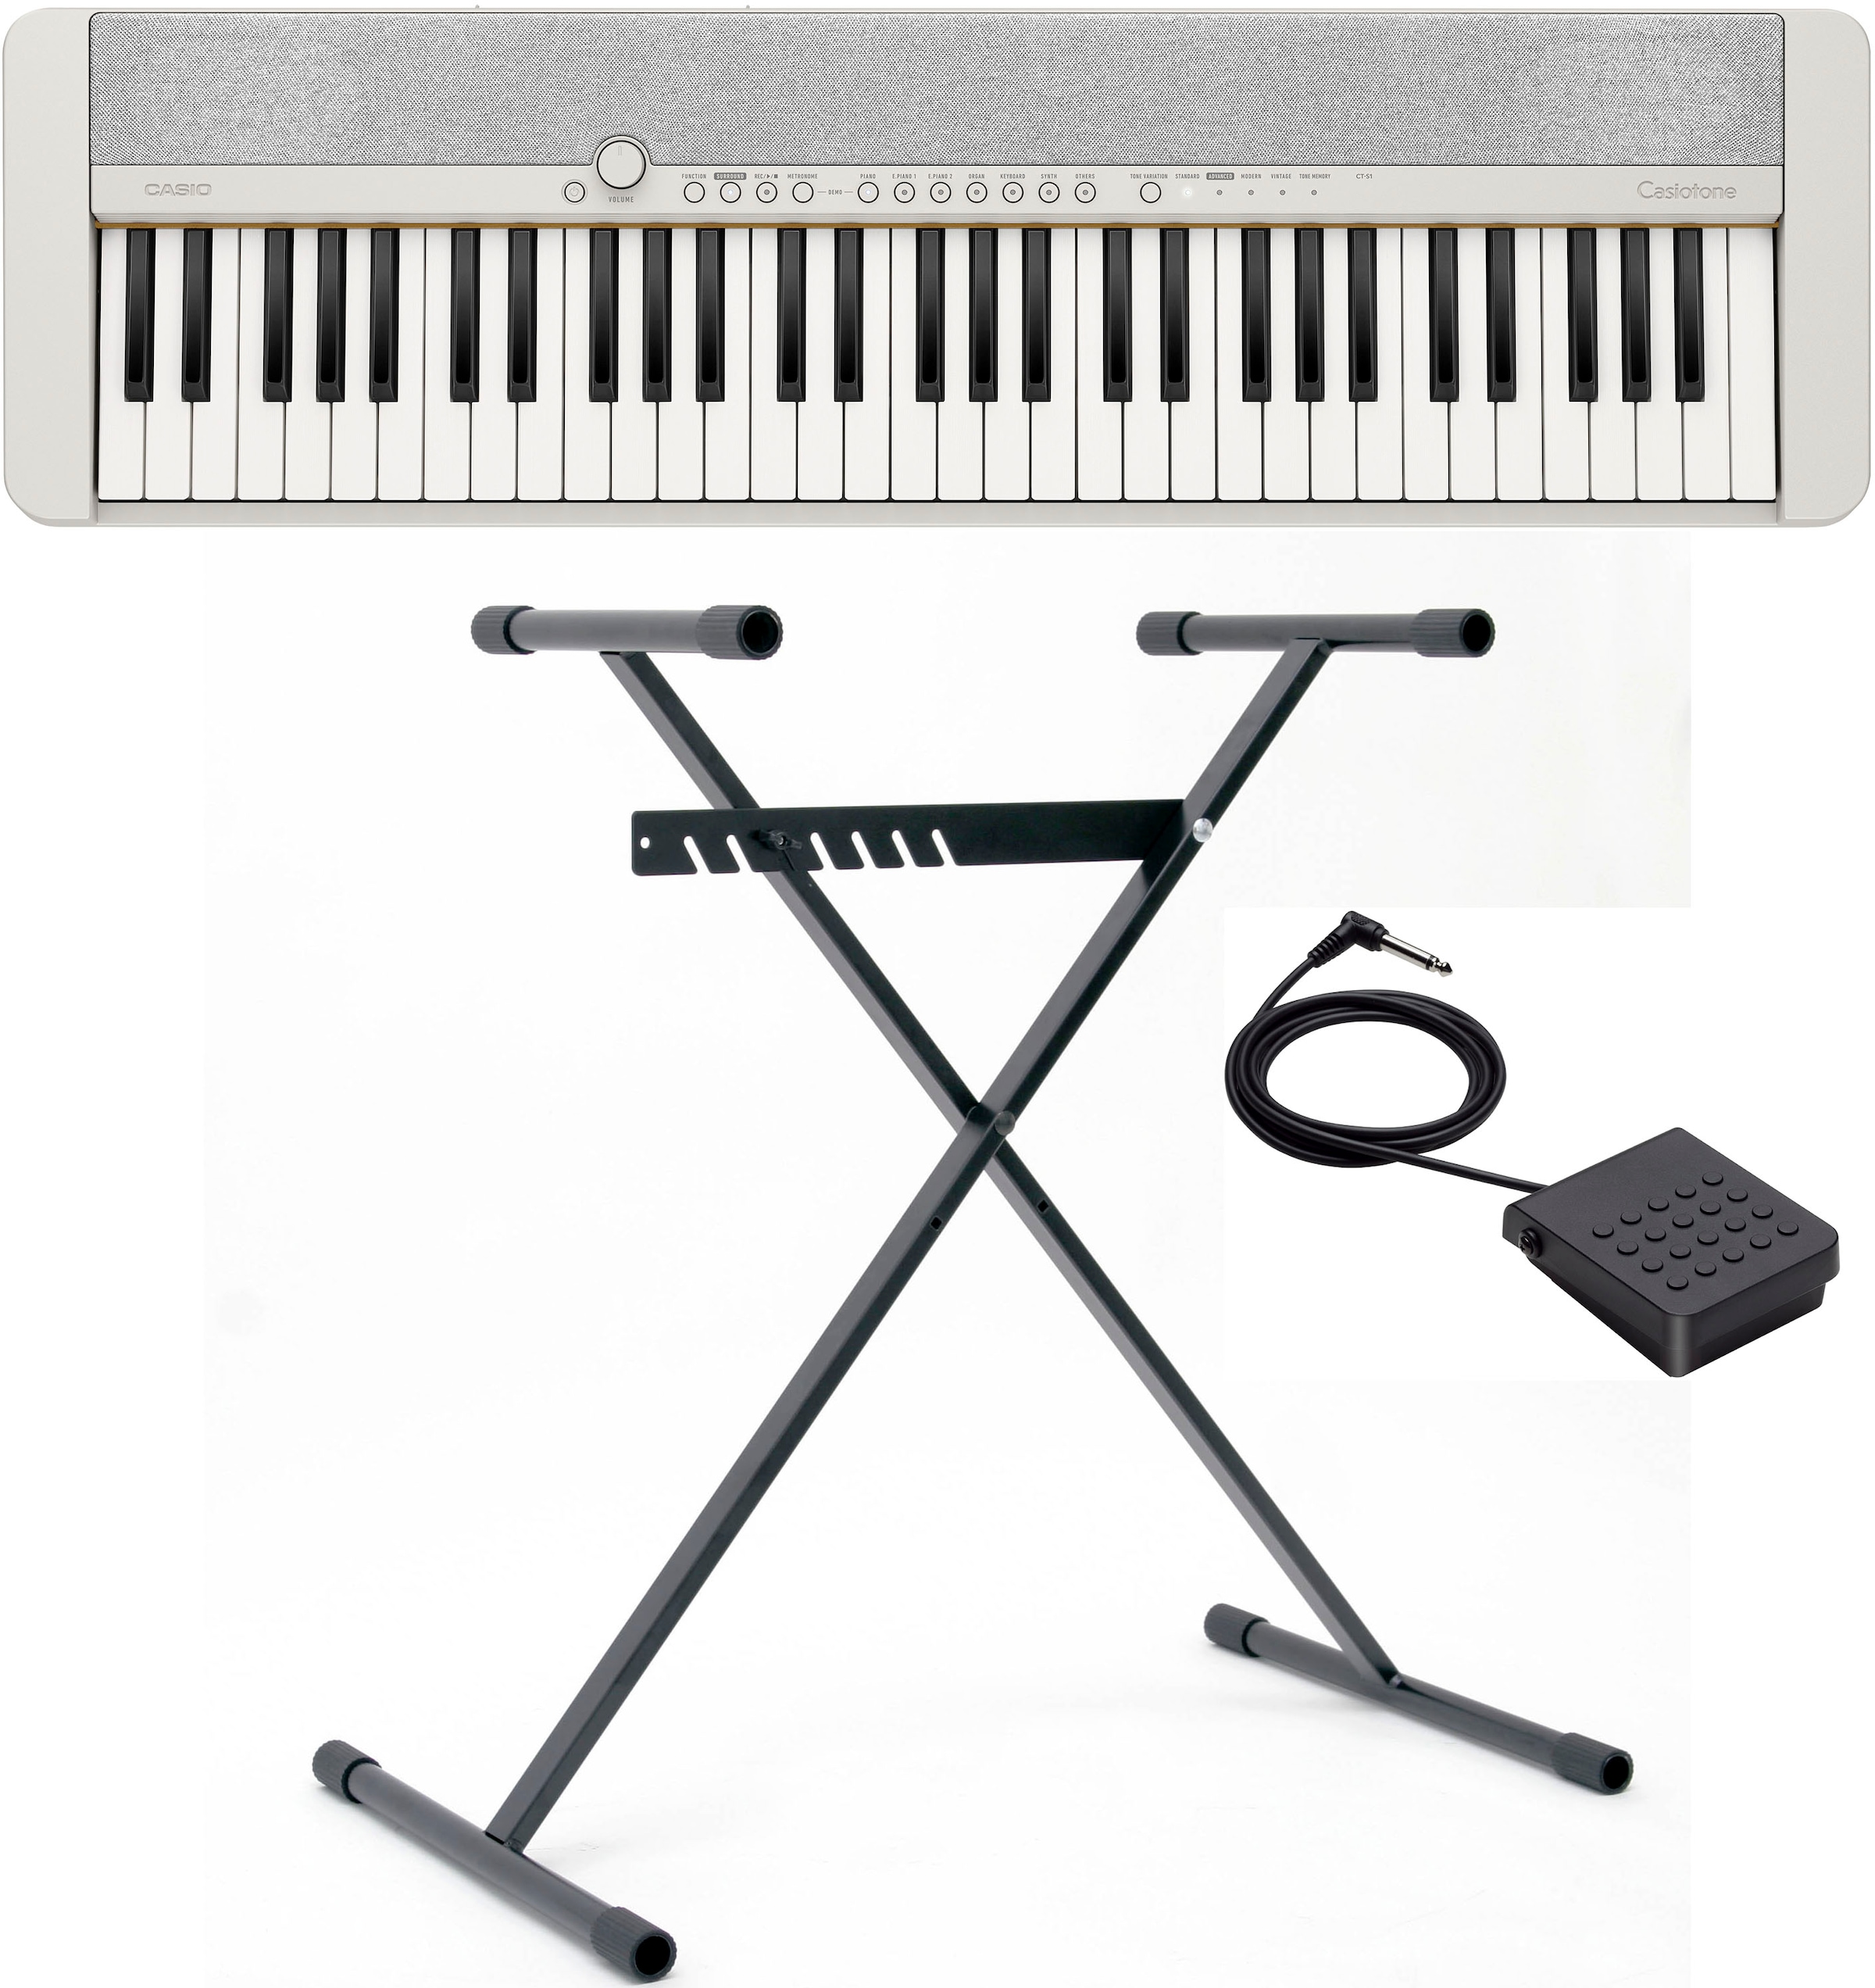 Casio Keyboards & Digitalpianos bei